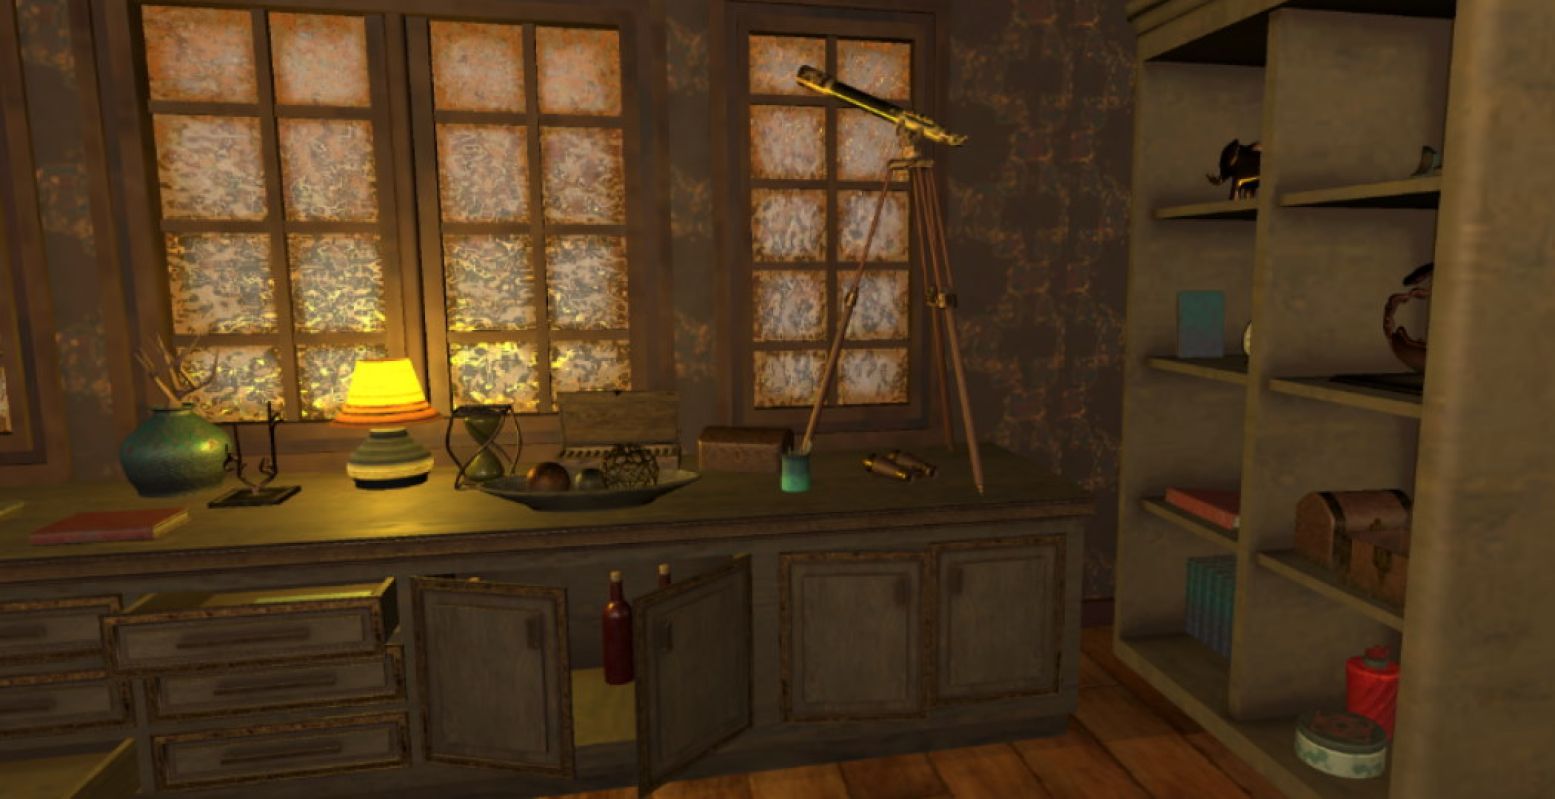 Dwaal door de virtuele kamers van de online escaperoom Lost Treasure. Foto: 3D Online Escaperoom Lost Treasure